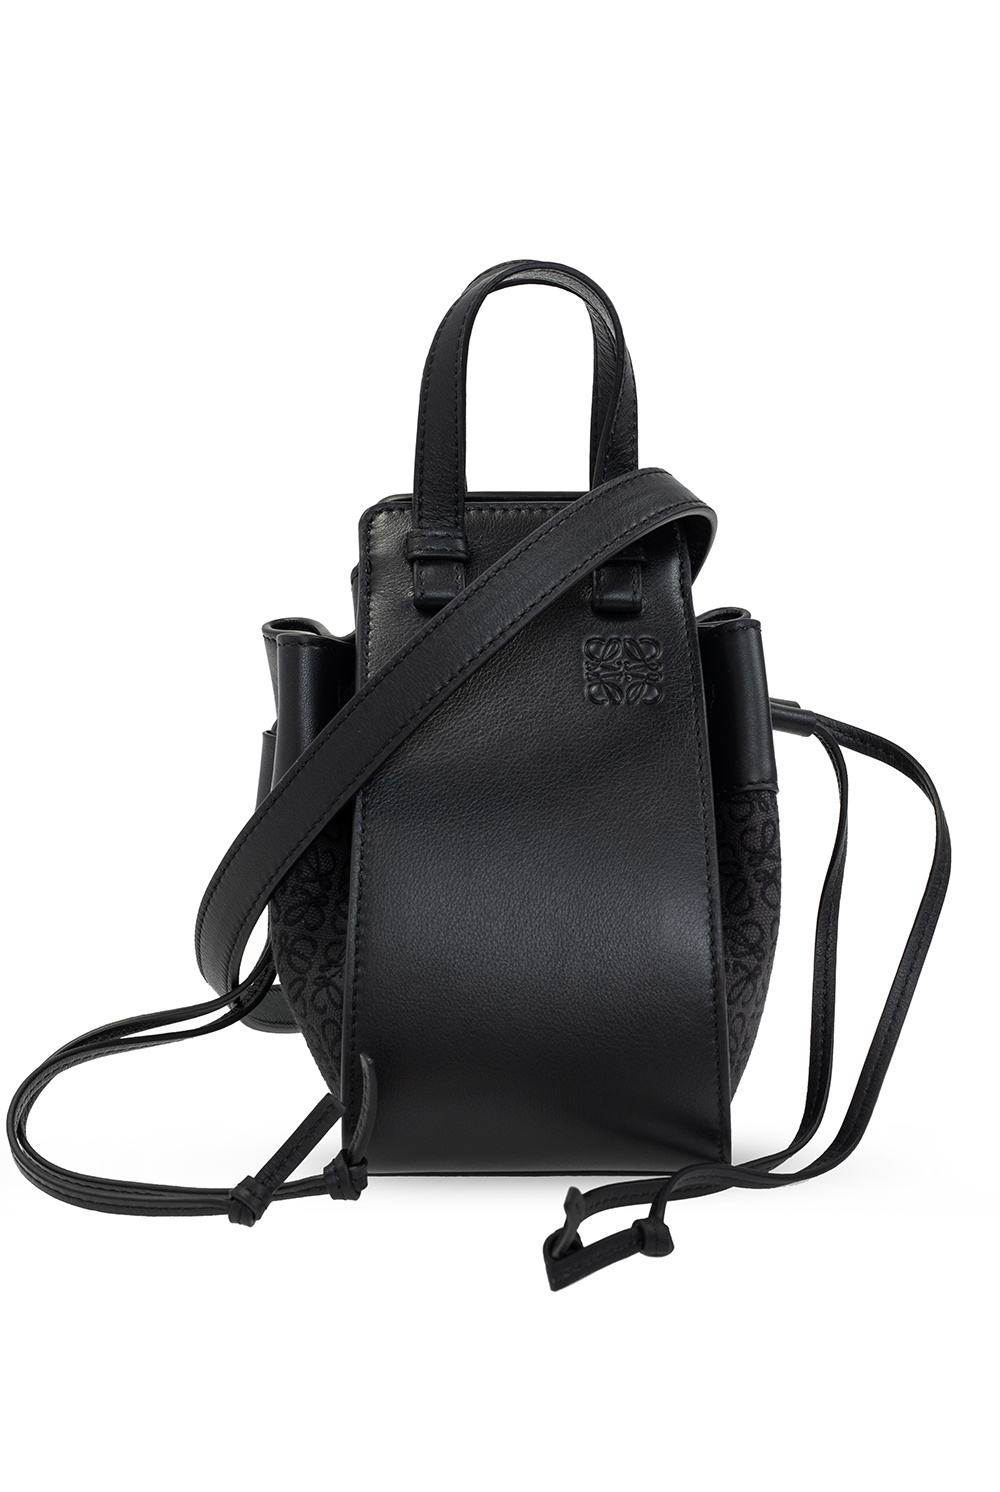 Loewe Hammock Mini Leather Cross-body Bag in Black